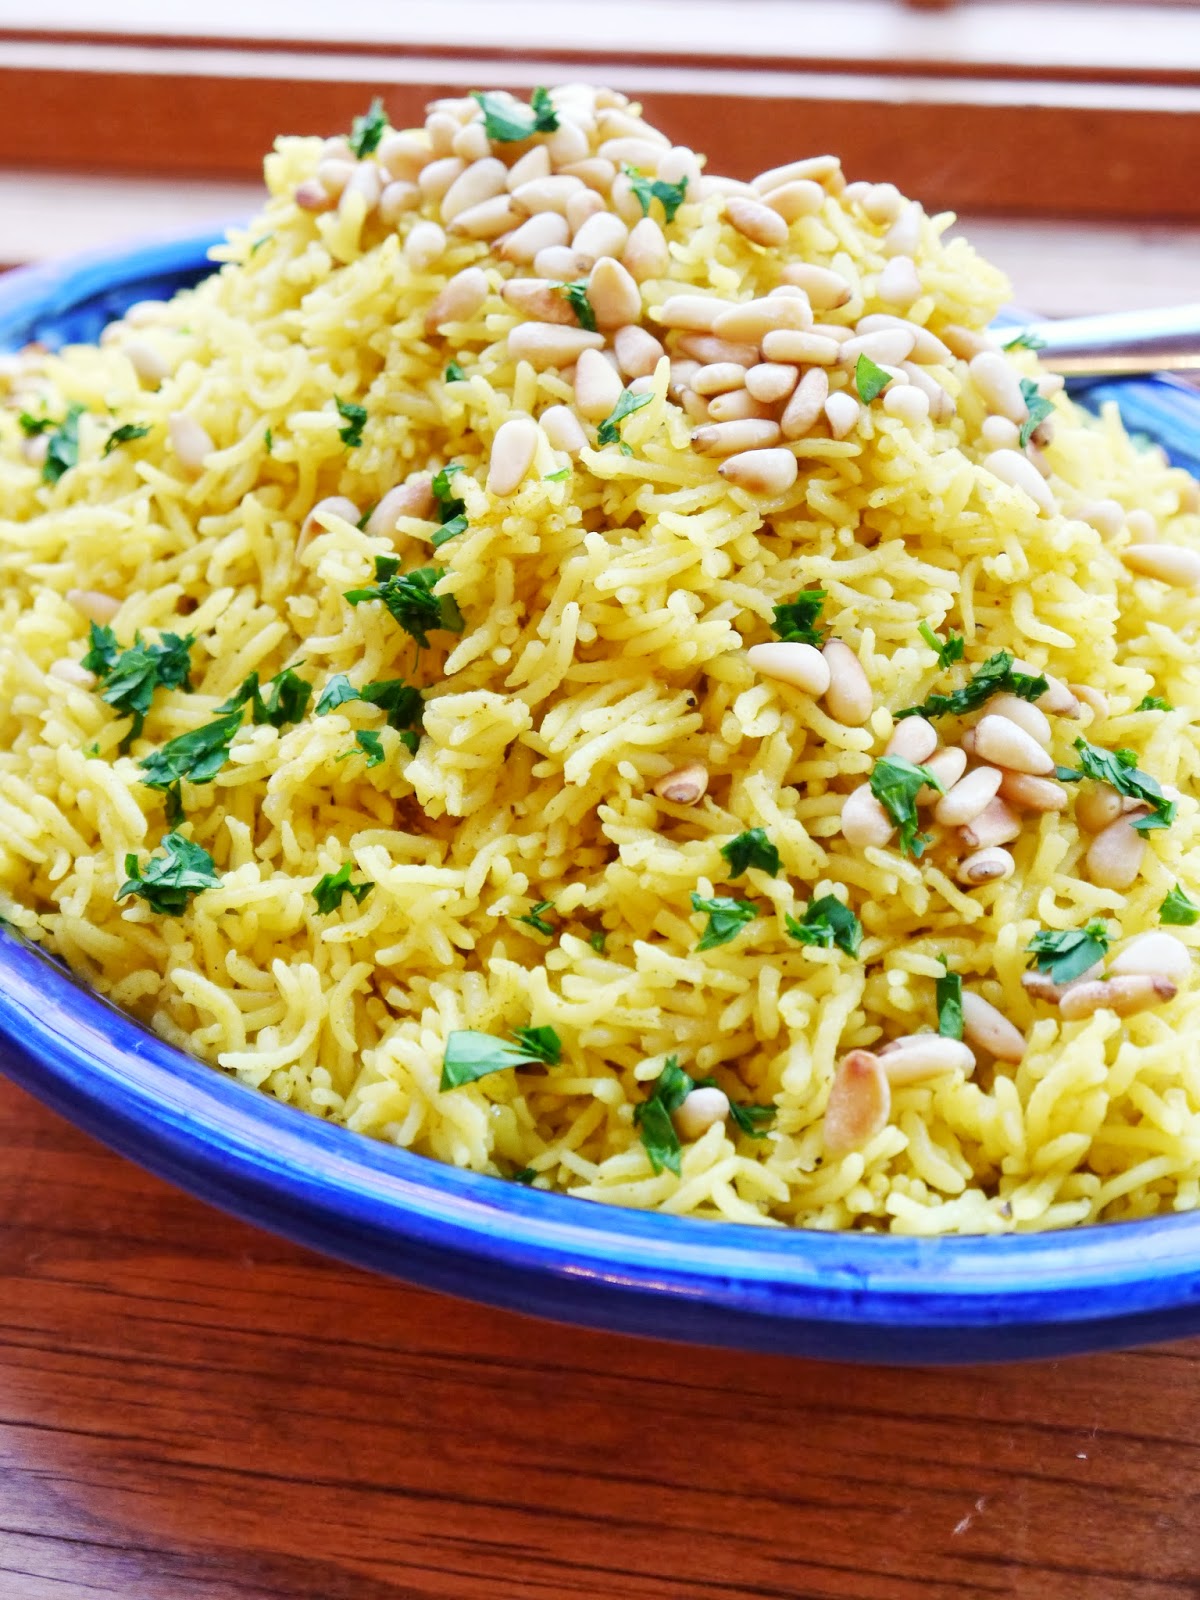 Bint Rhoda's Kitchen: How to Make Fluffy, Flavorful Rice (Like an Arab)